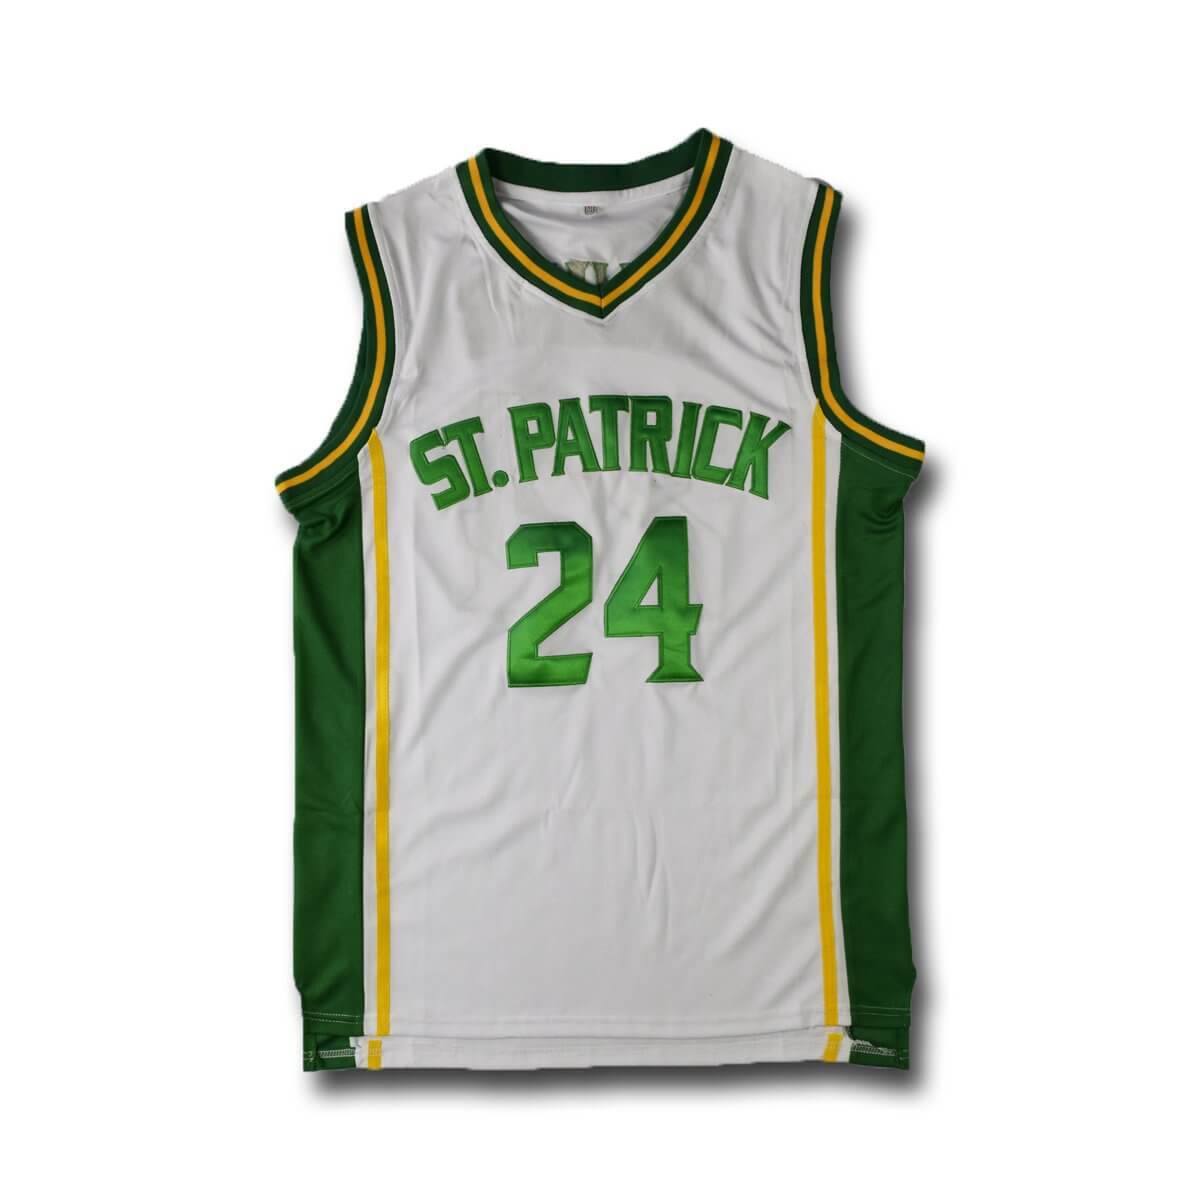 Irving Saint Patrick 24 High School Basketball Jersey